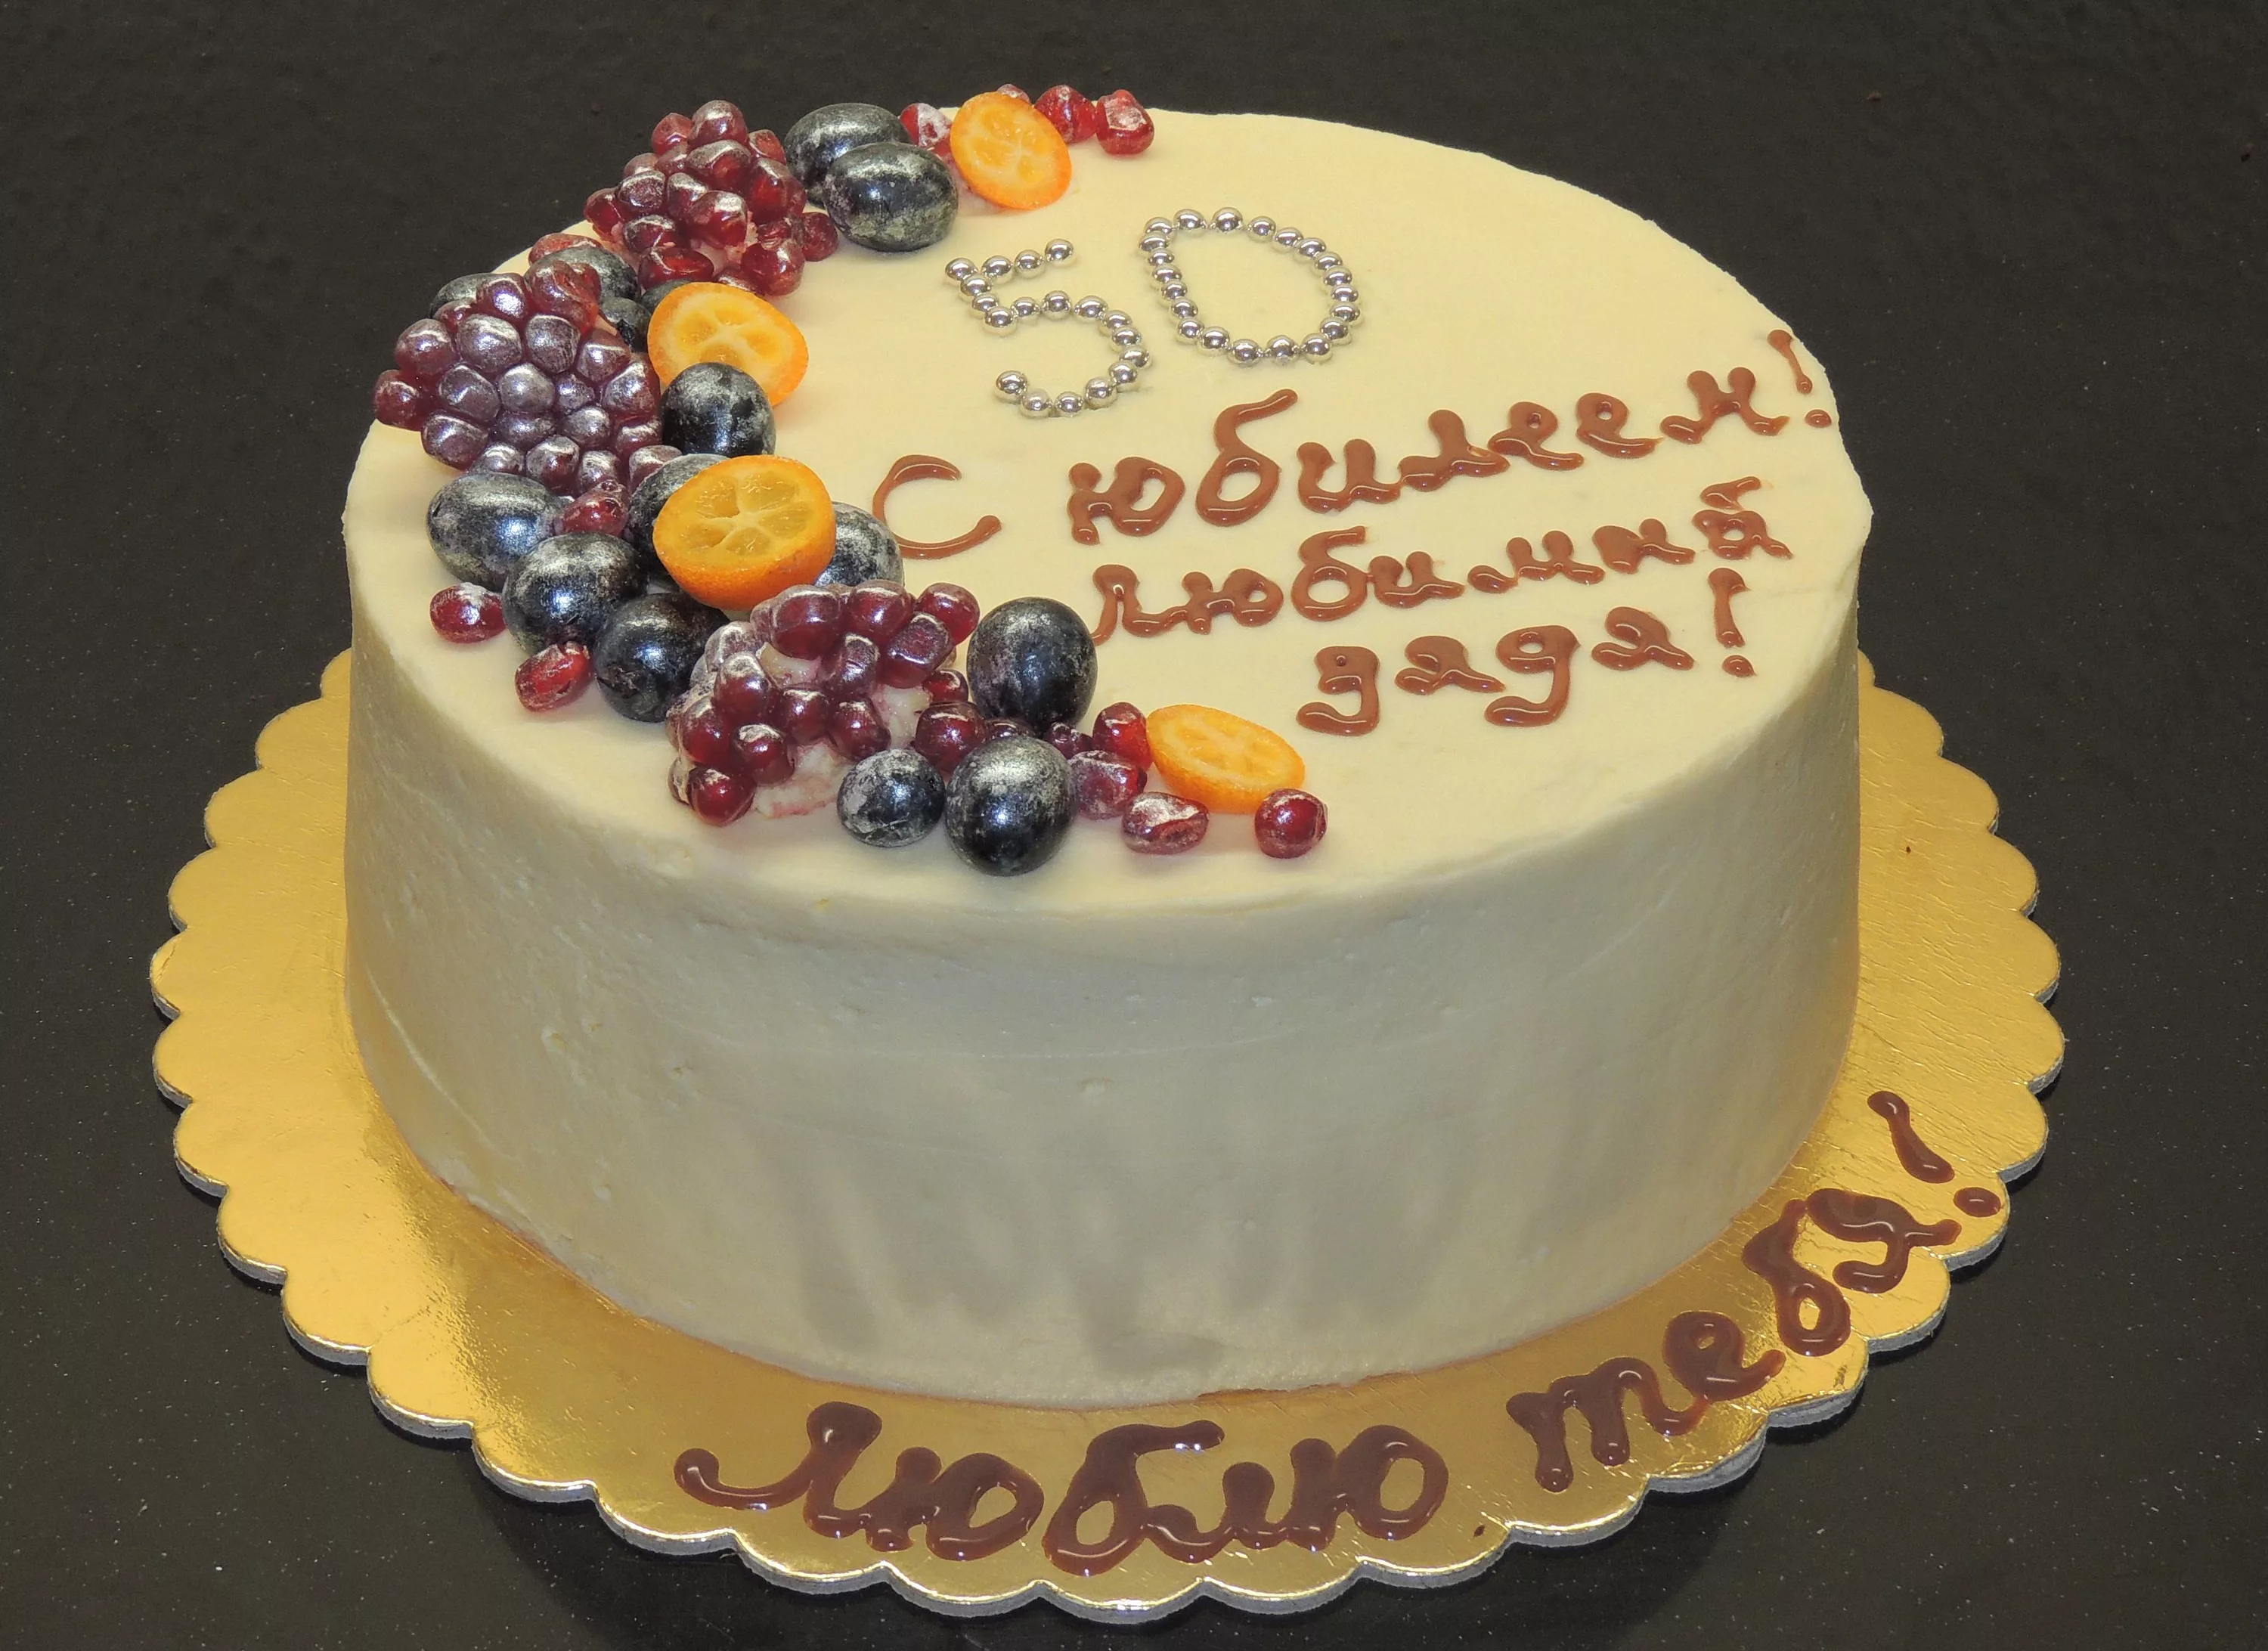 Надписи на торте 55 лет. Торт с днем рождения!. Торт маме на день рождения. Оригинальные надписи на тортах. Торт маме на юбилей.